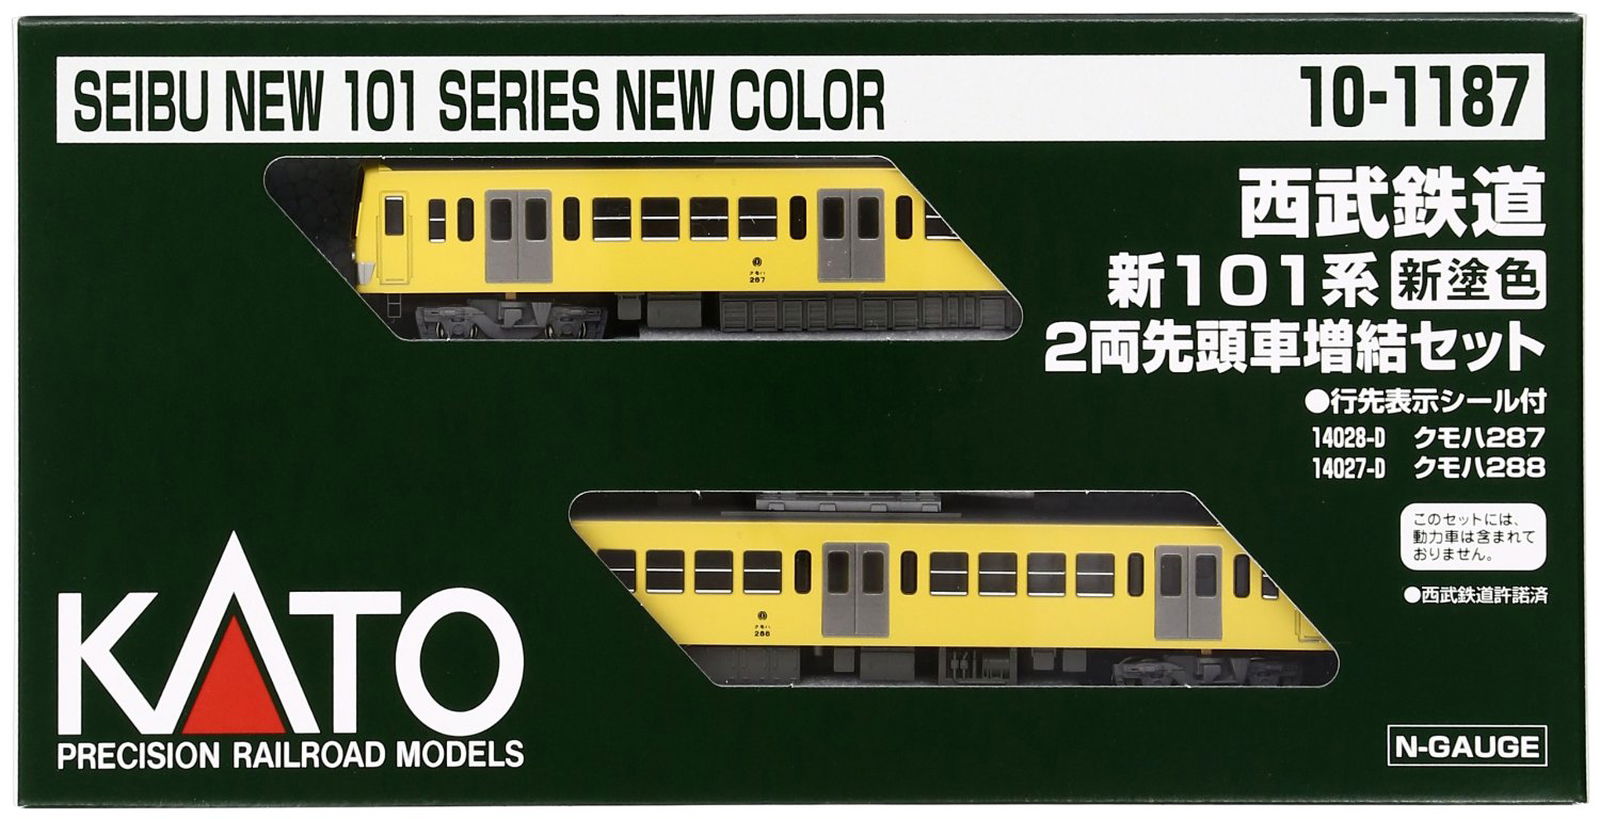 KATO 10-1187 Seibu New 101 System New Paint Color - BanzaiHobby